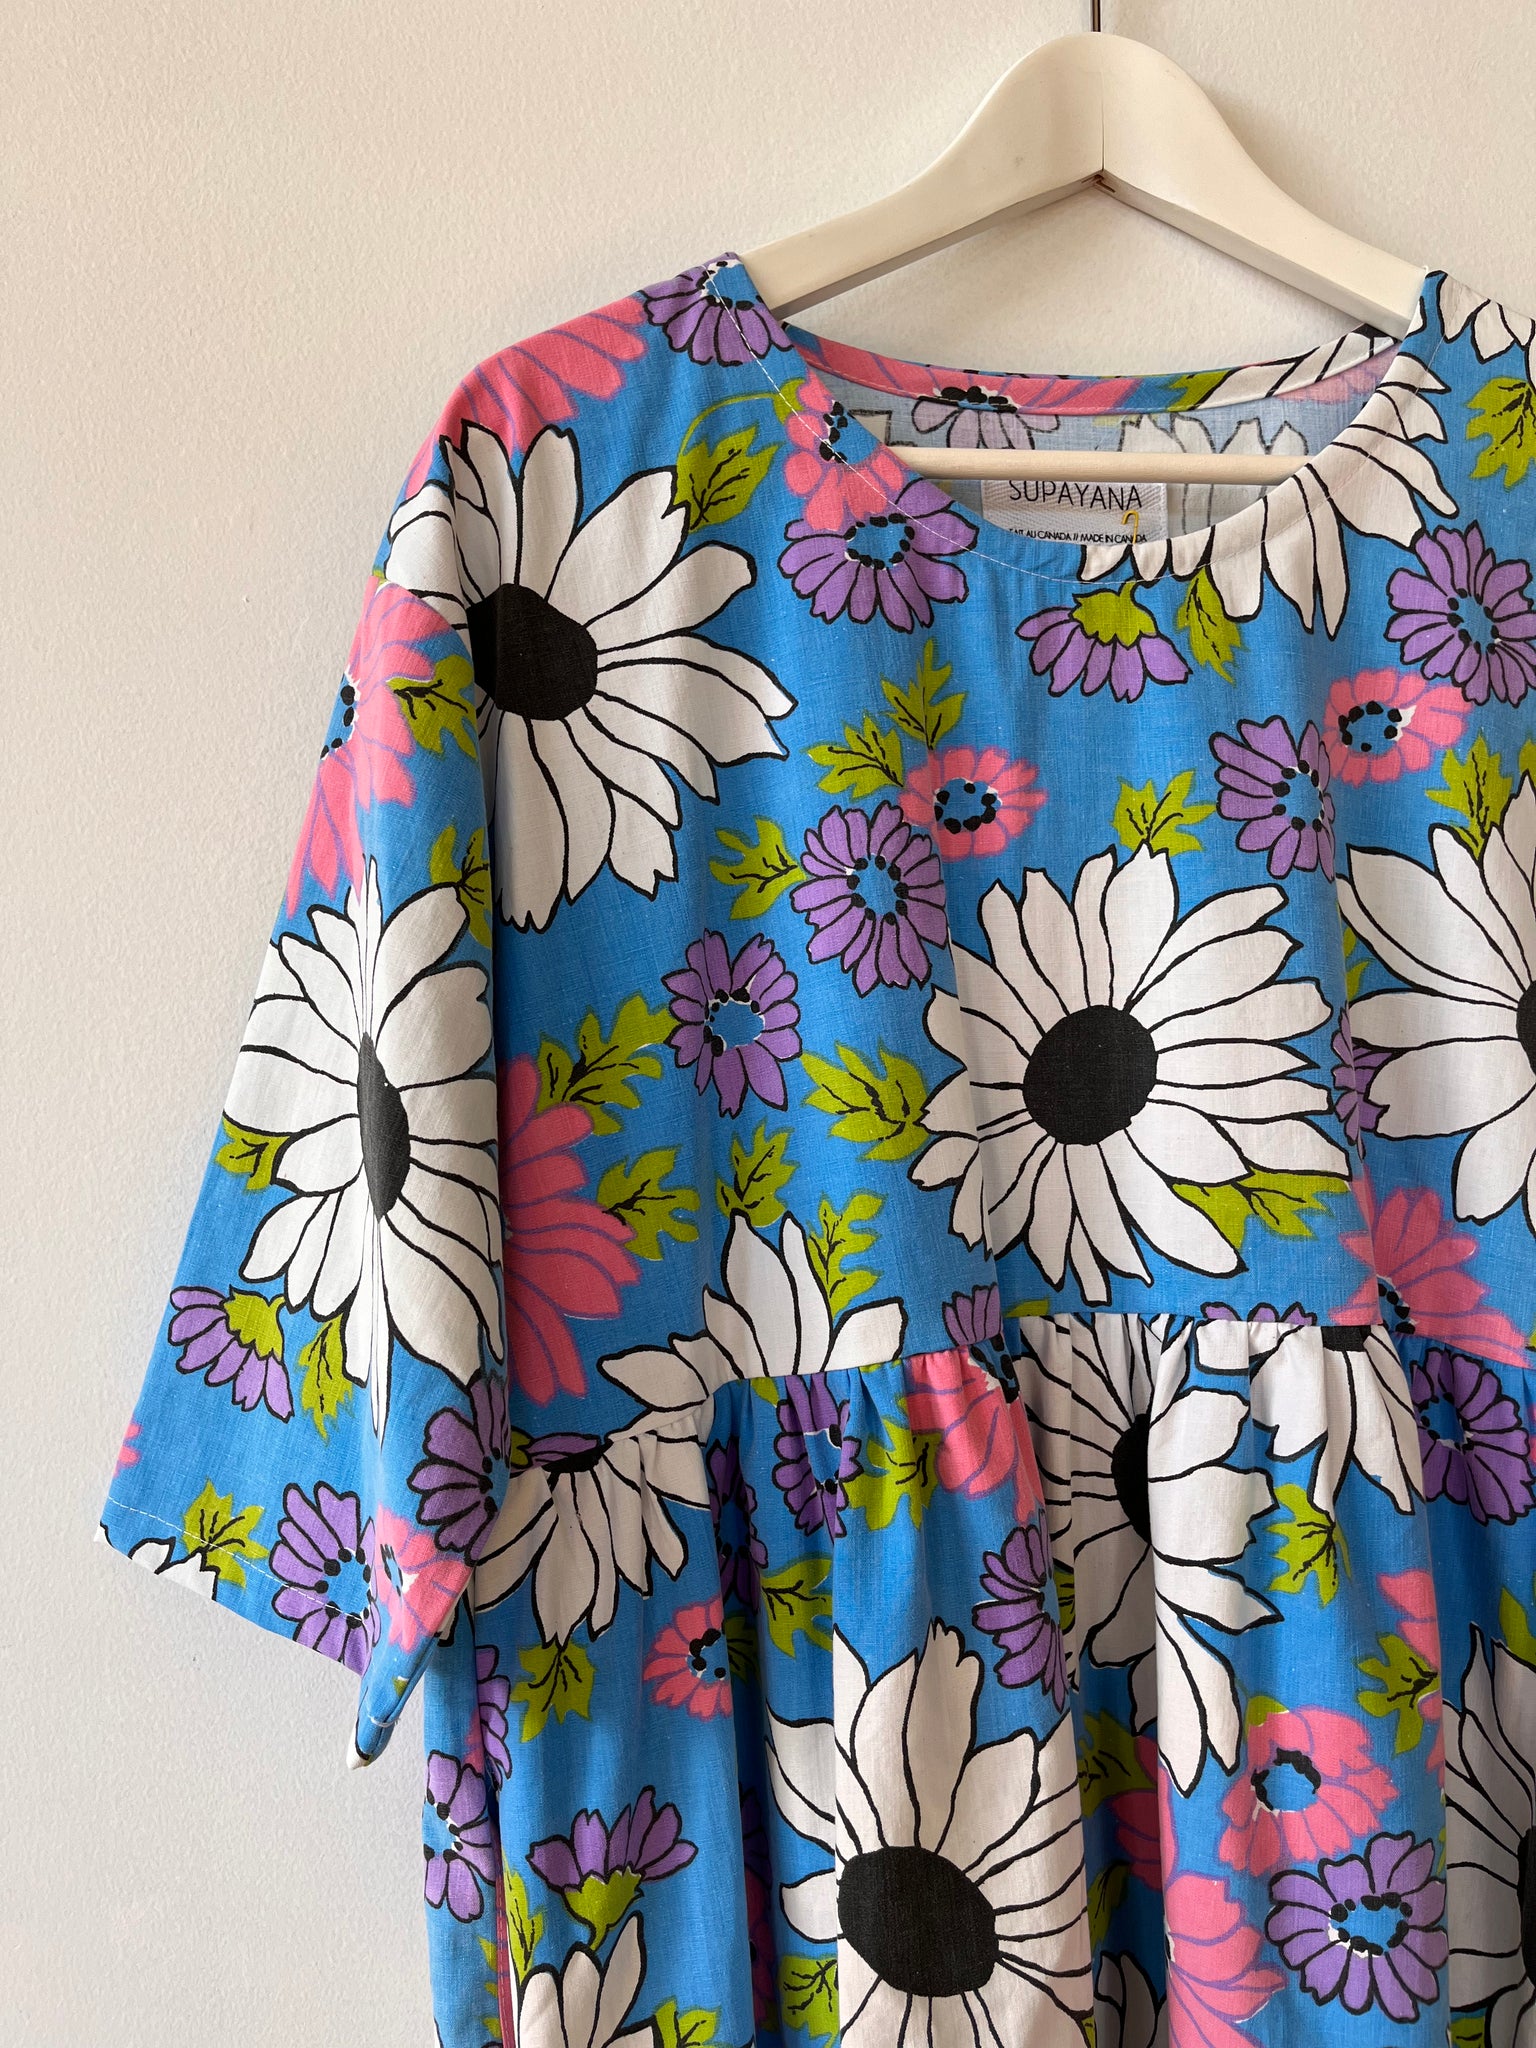 OOAK Flower power midi dress - upcycled cotton fabric